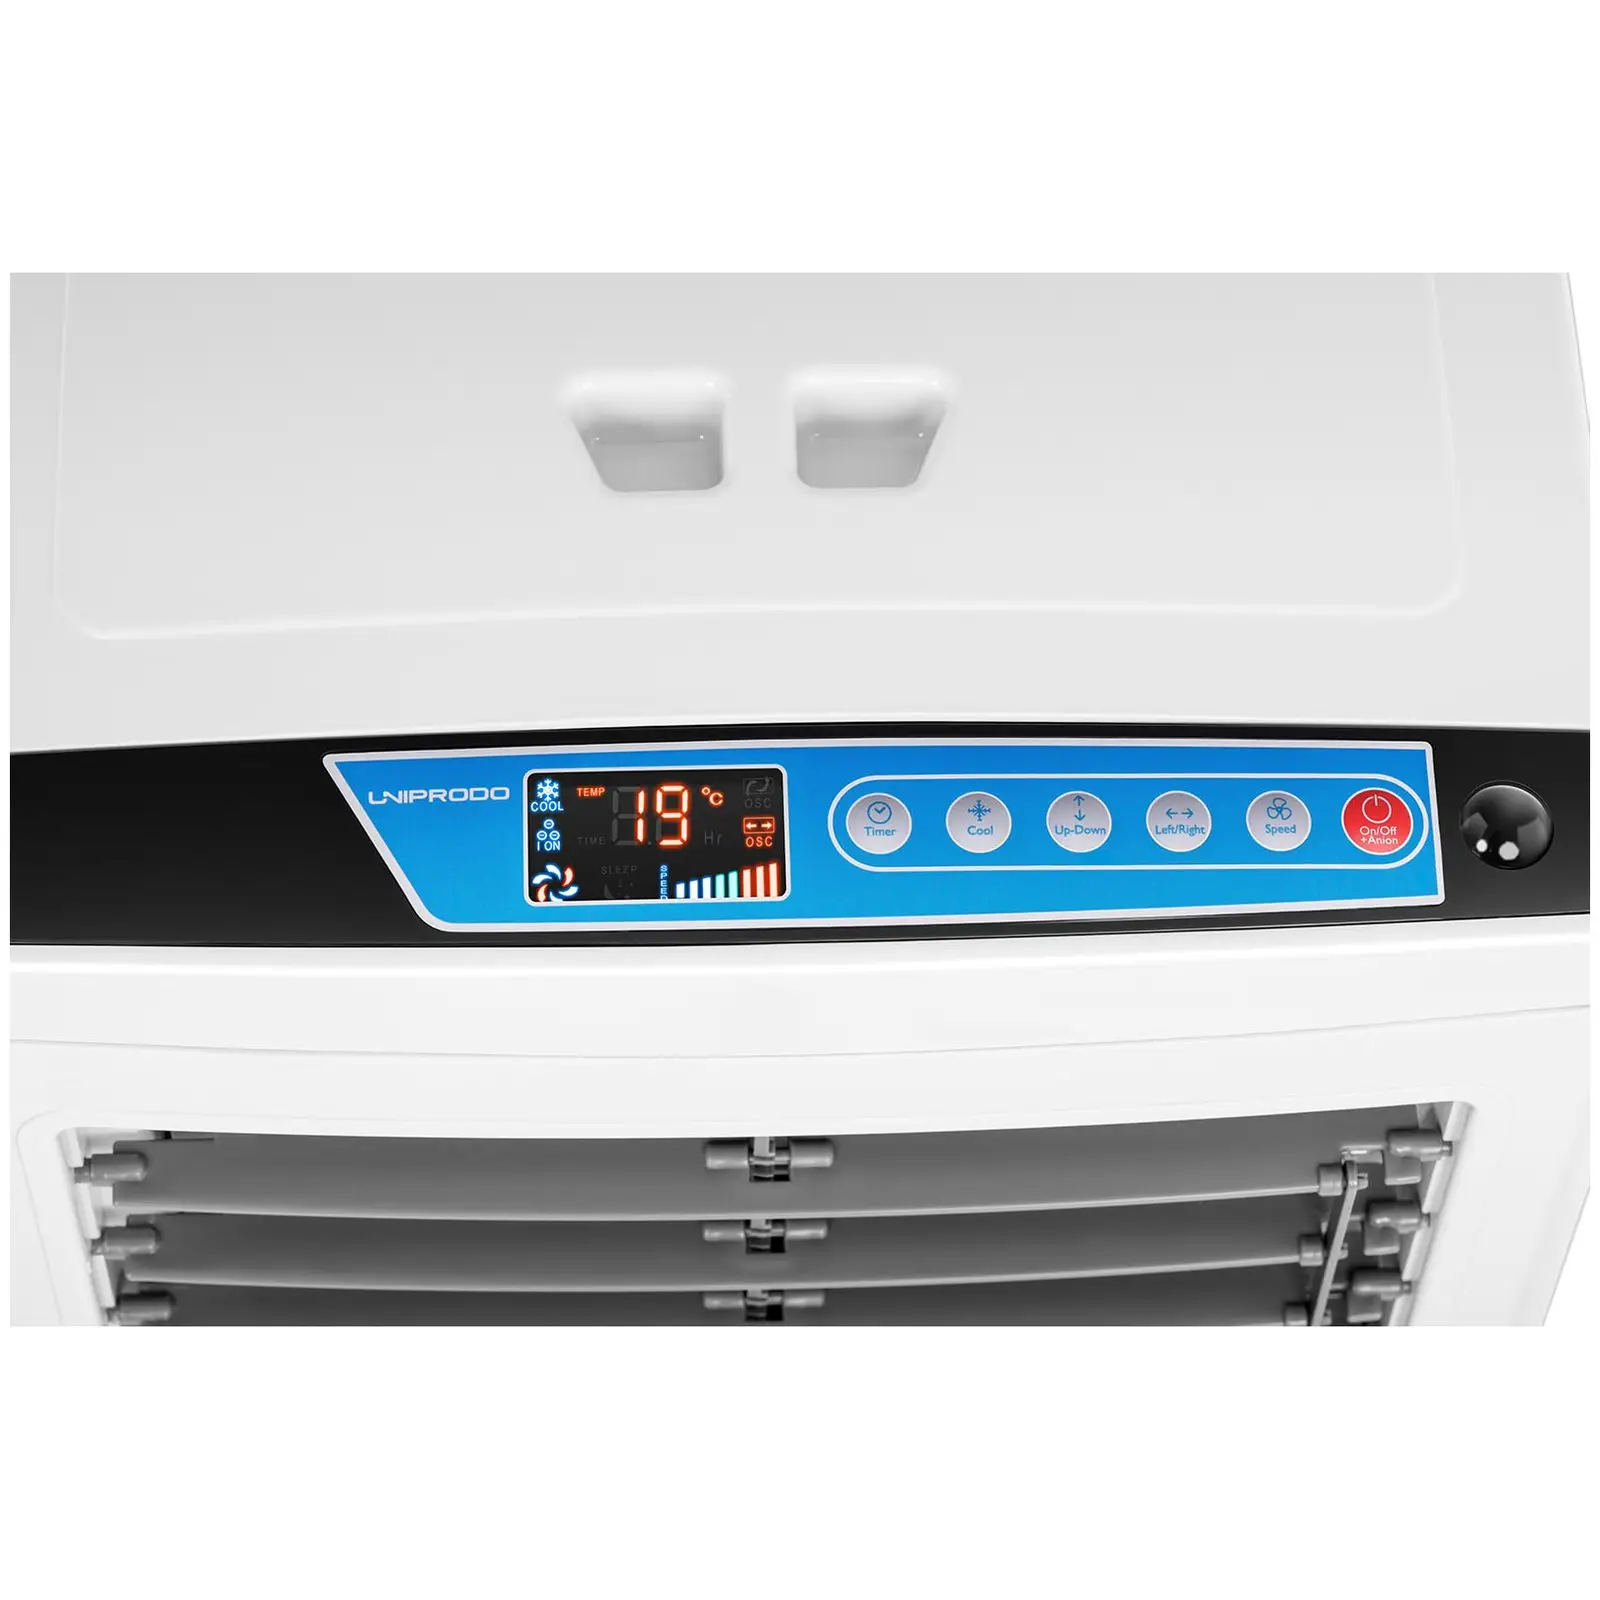 Produtos recondicionados Climatizador evaporativo - 100 W - controlo